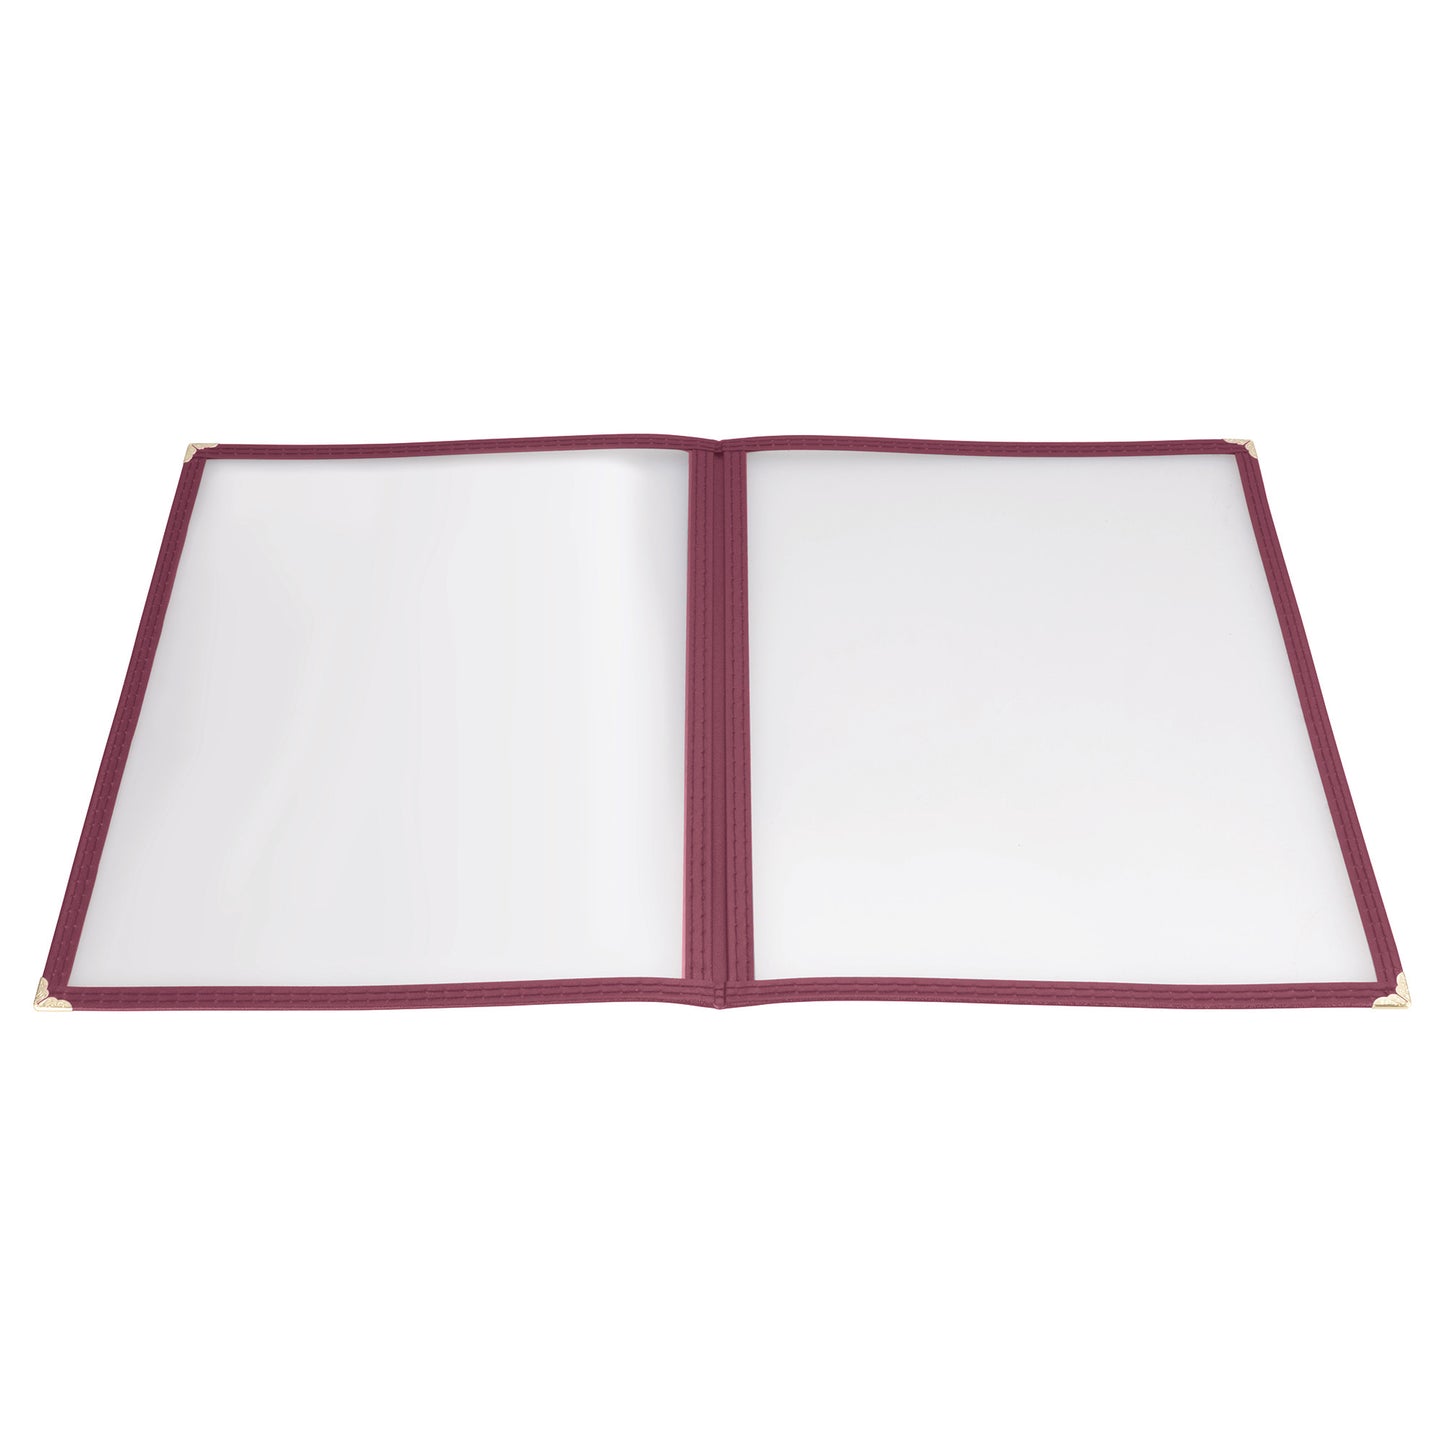 PMCD-14U - Book-Fold Double Panel Menu Cover - Burgundy, 9-9/16 x 15